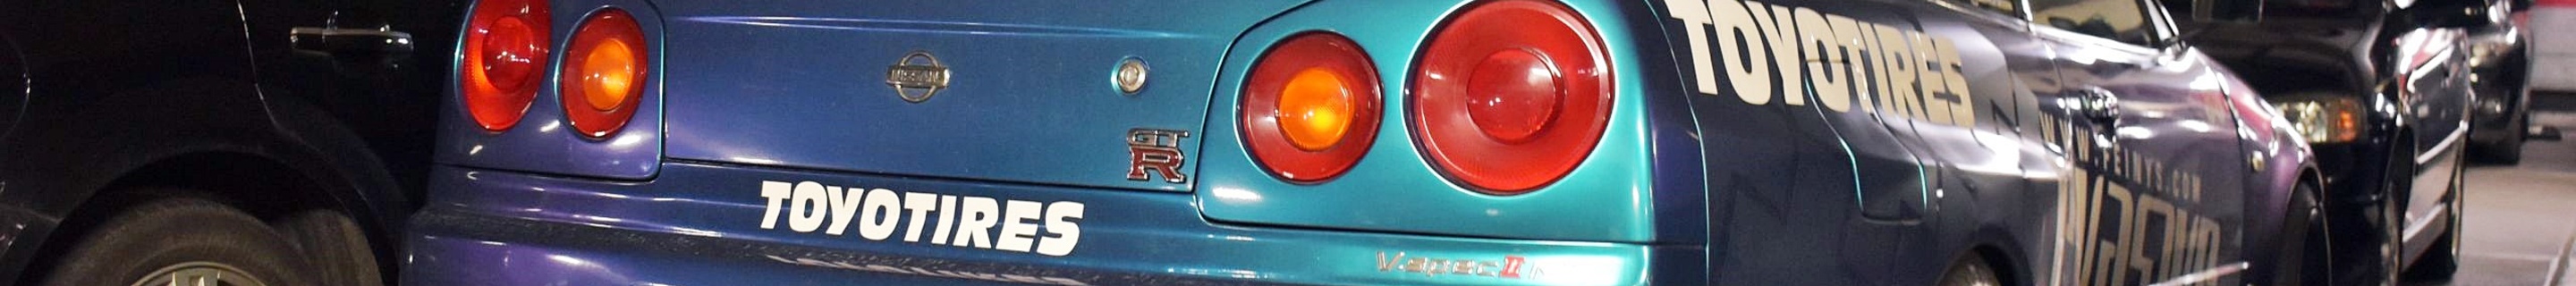 Nissan Skyline R34 GT-R V-Spec II Nür